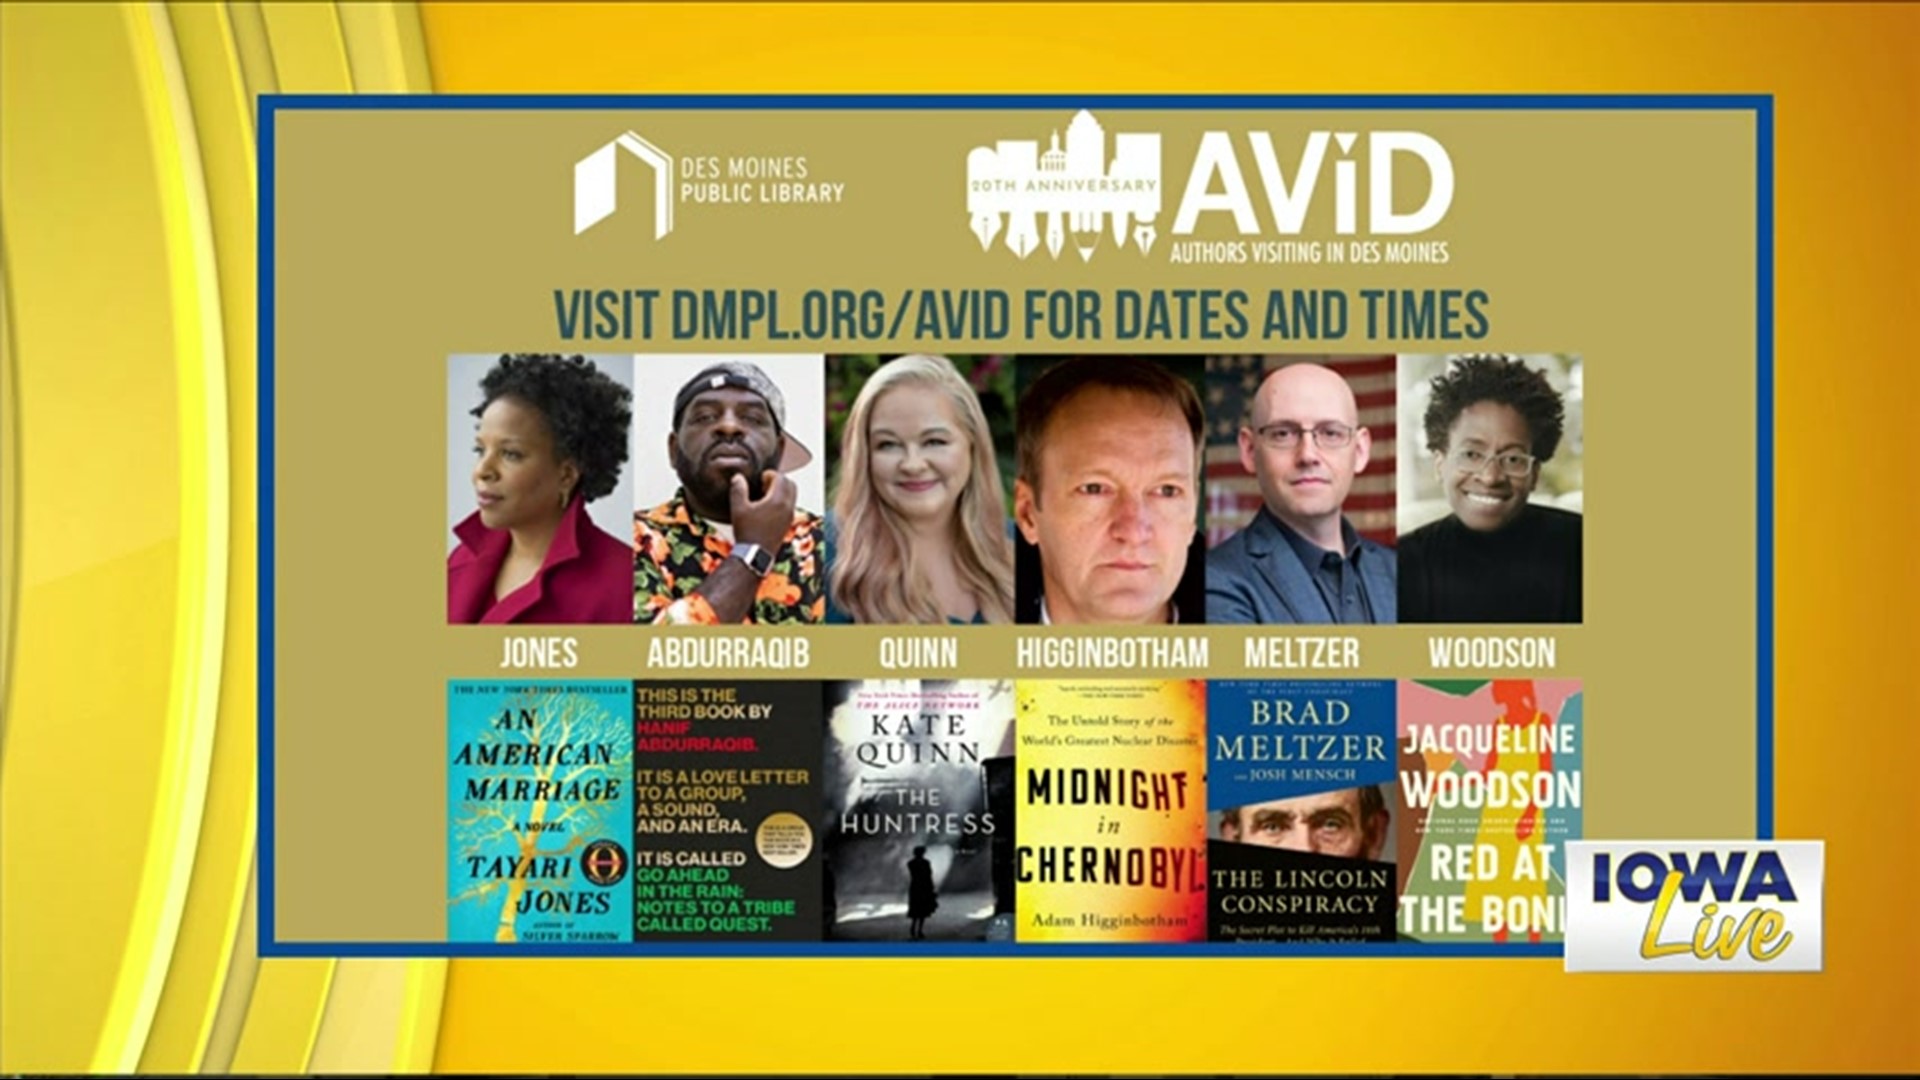 AViD Series starts again, Des Moines Public Library